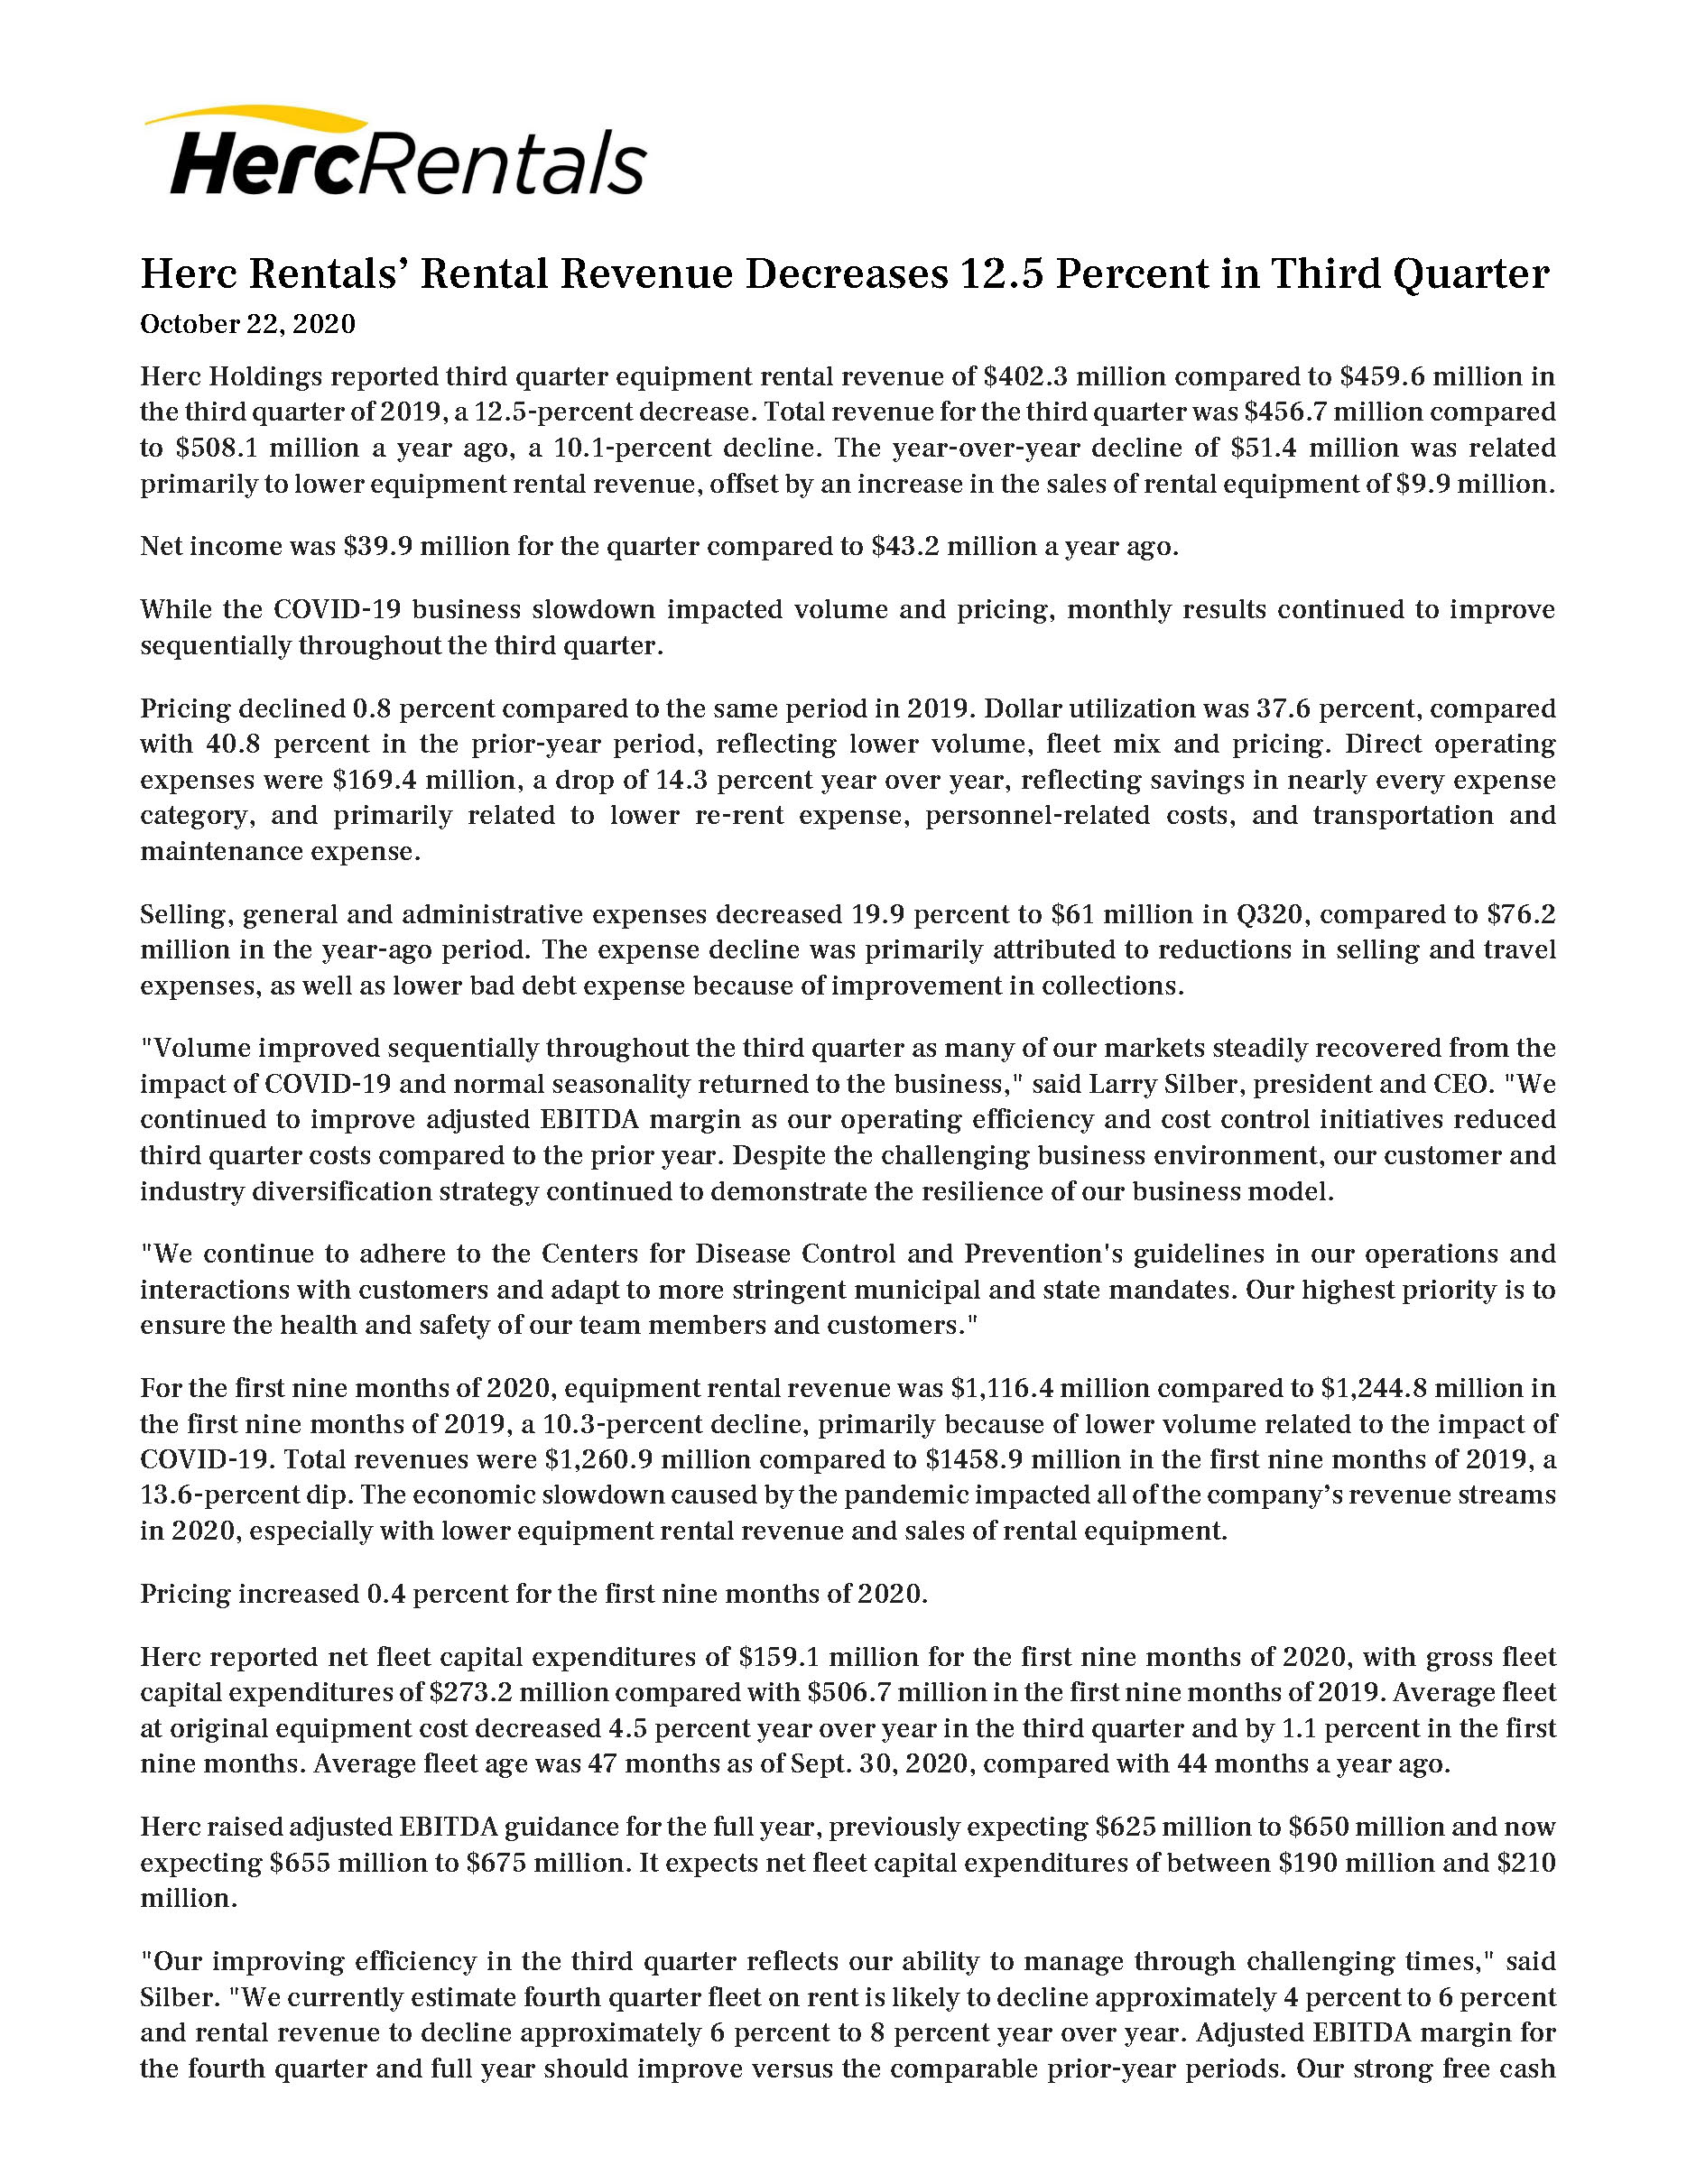 Pages from Herc Rentals’ Rental Revenue Decreases 12.5 Percent in Third Quarter 10.22.2020